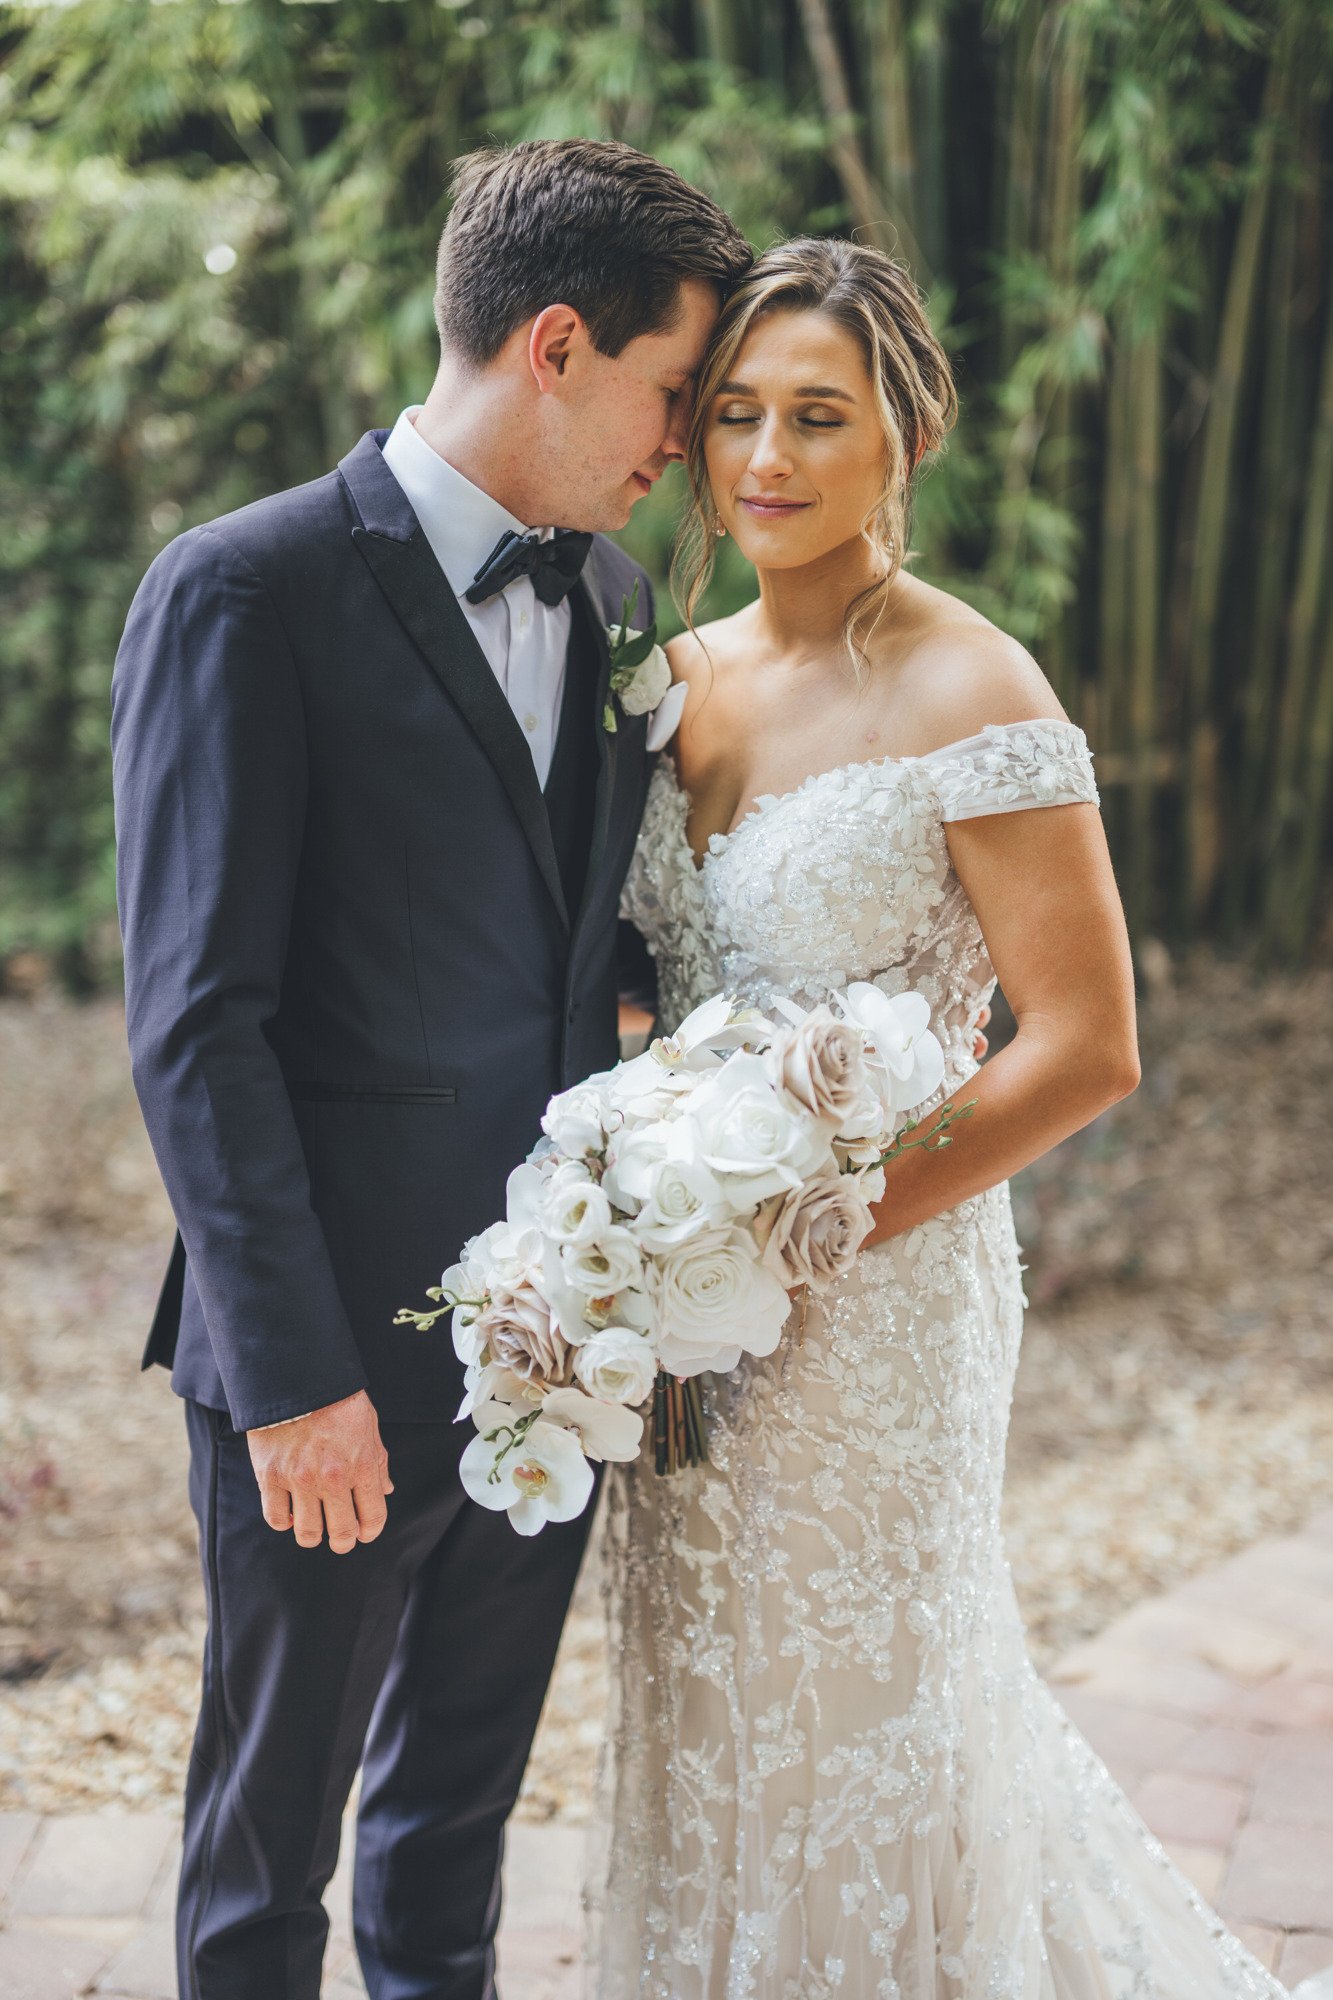 Bow Tie Photo & Video couple during bridal portraits at Club Lake Plantation near Orlando, FL.jpg